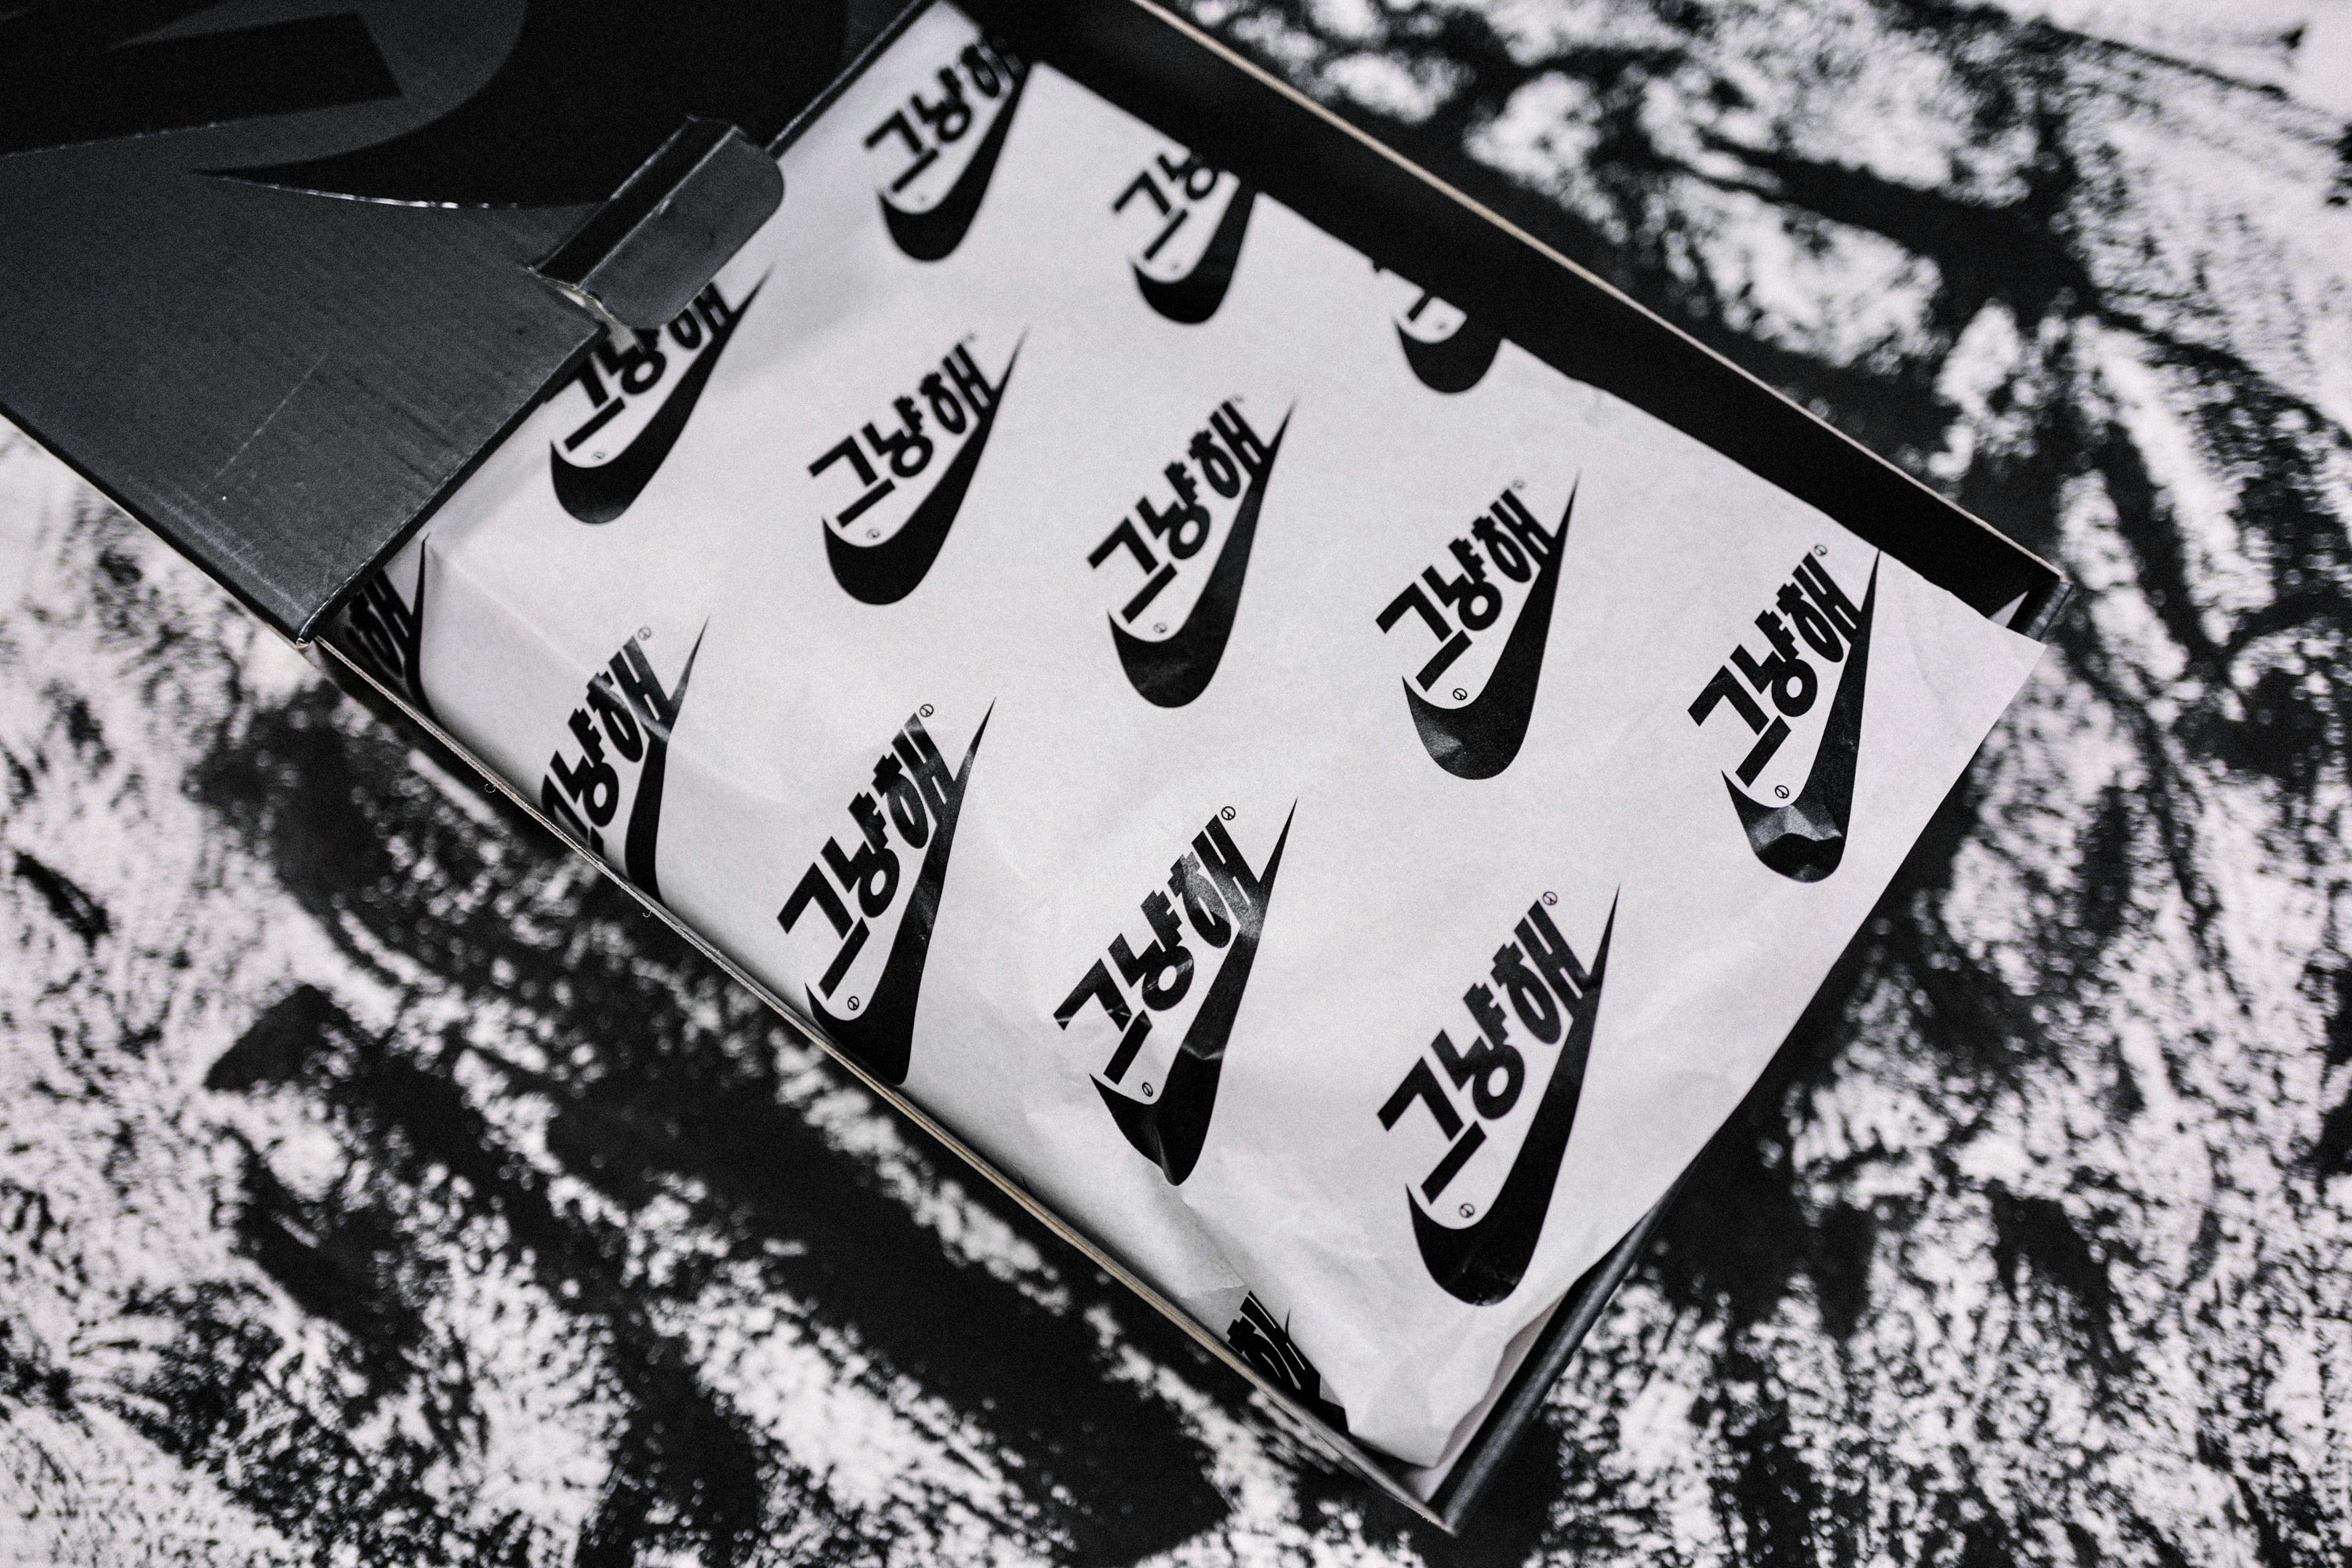 G-Dragon 作品加持！近賞 PEACEMINUSONE x Nike 全新聯乘 Air Force 1「Para-Noise」